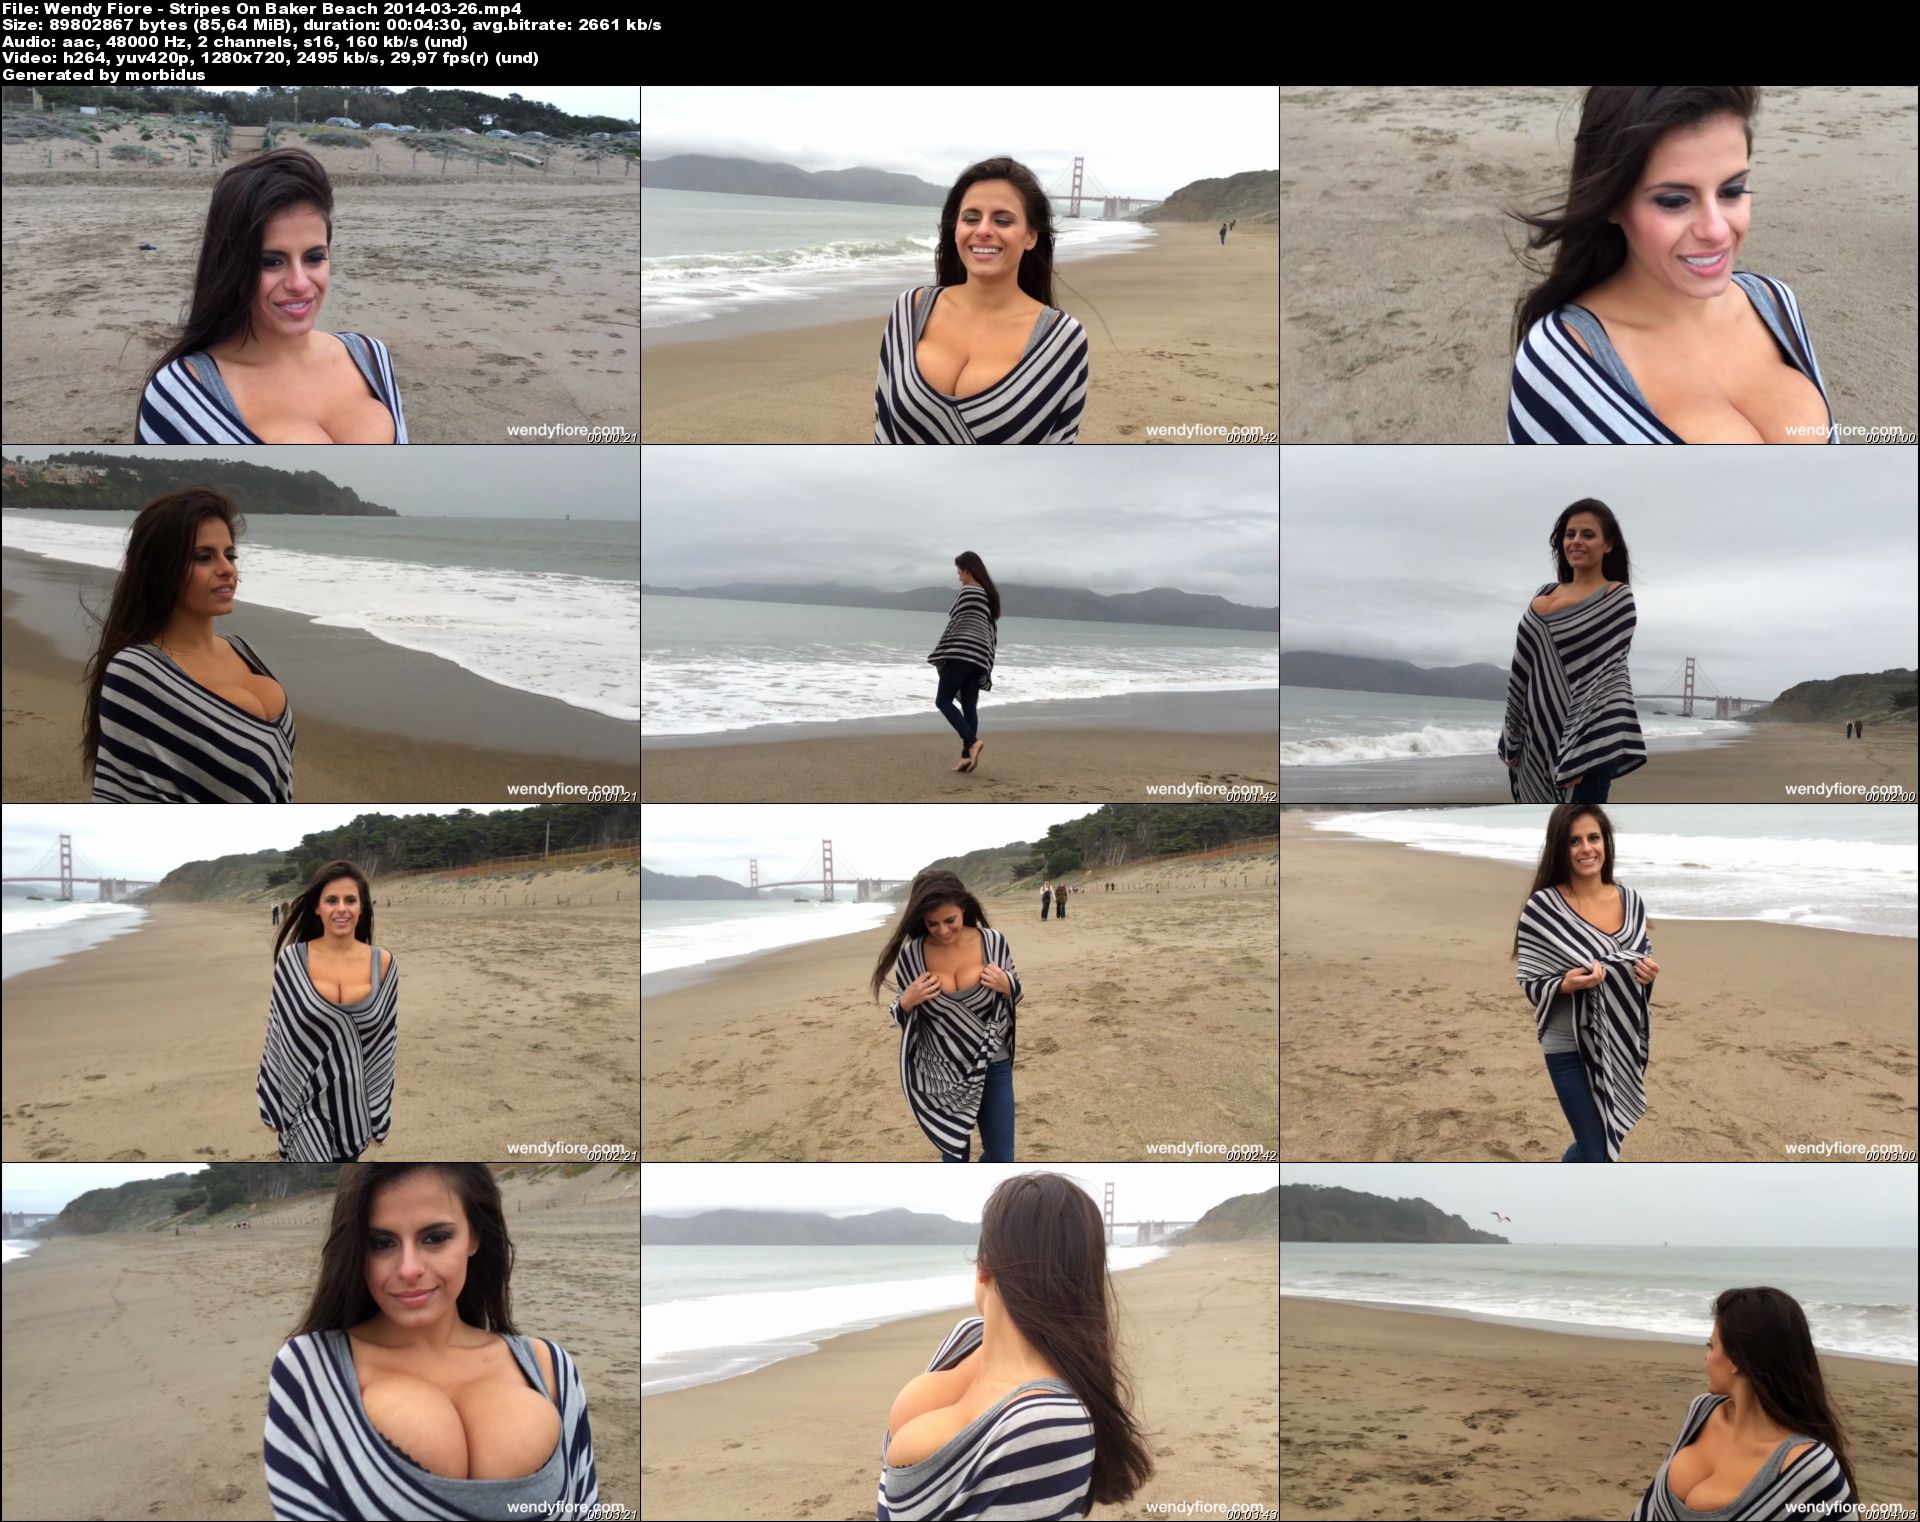 Wendy Fiore - Stripes On Baker Beach 2014-03-26.jpeg